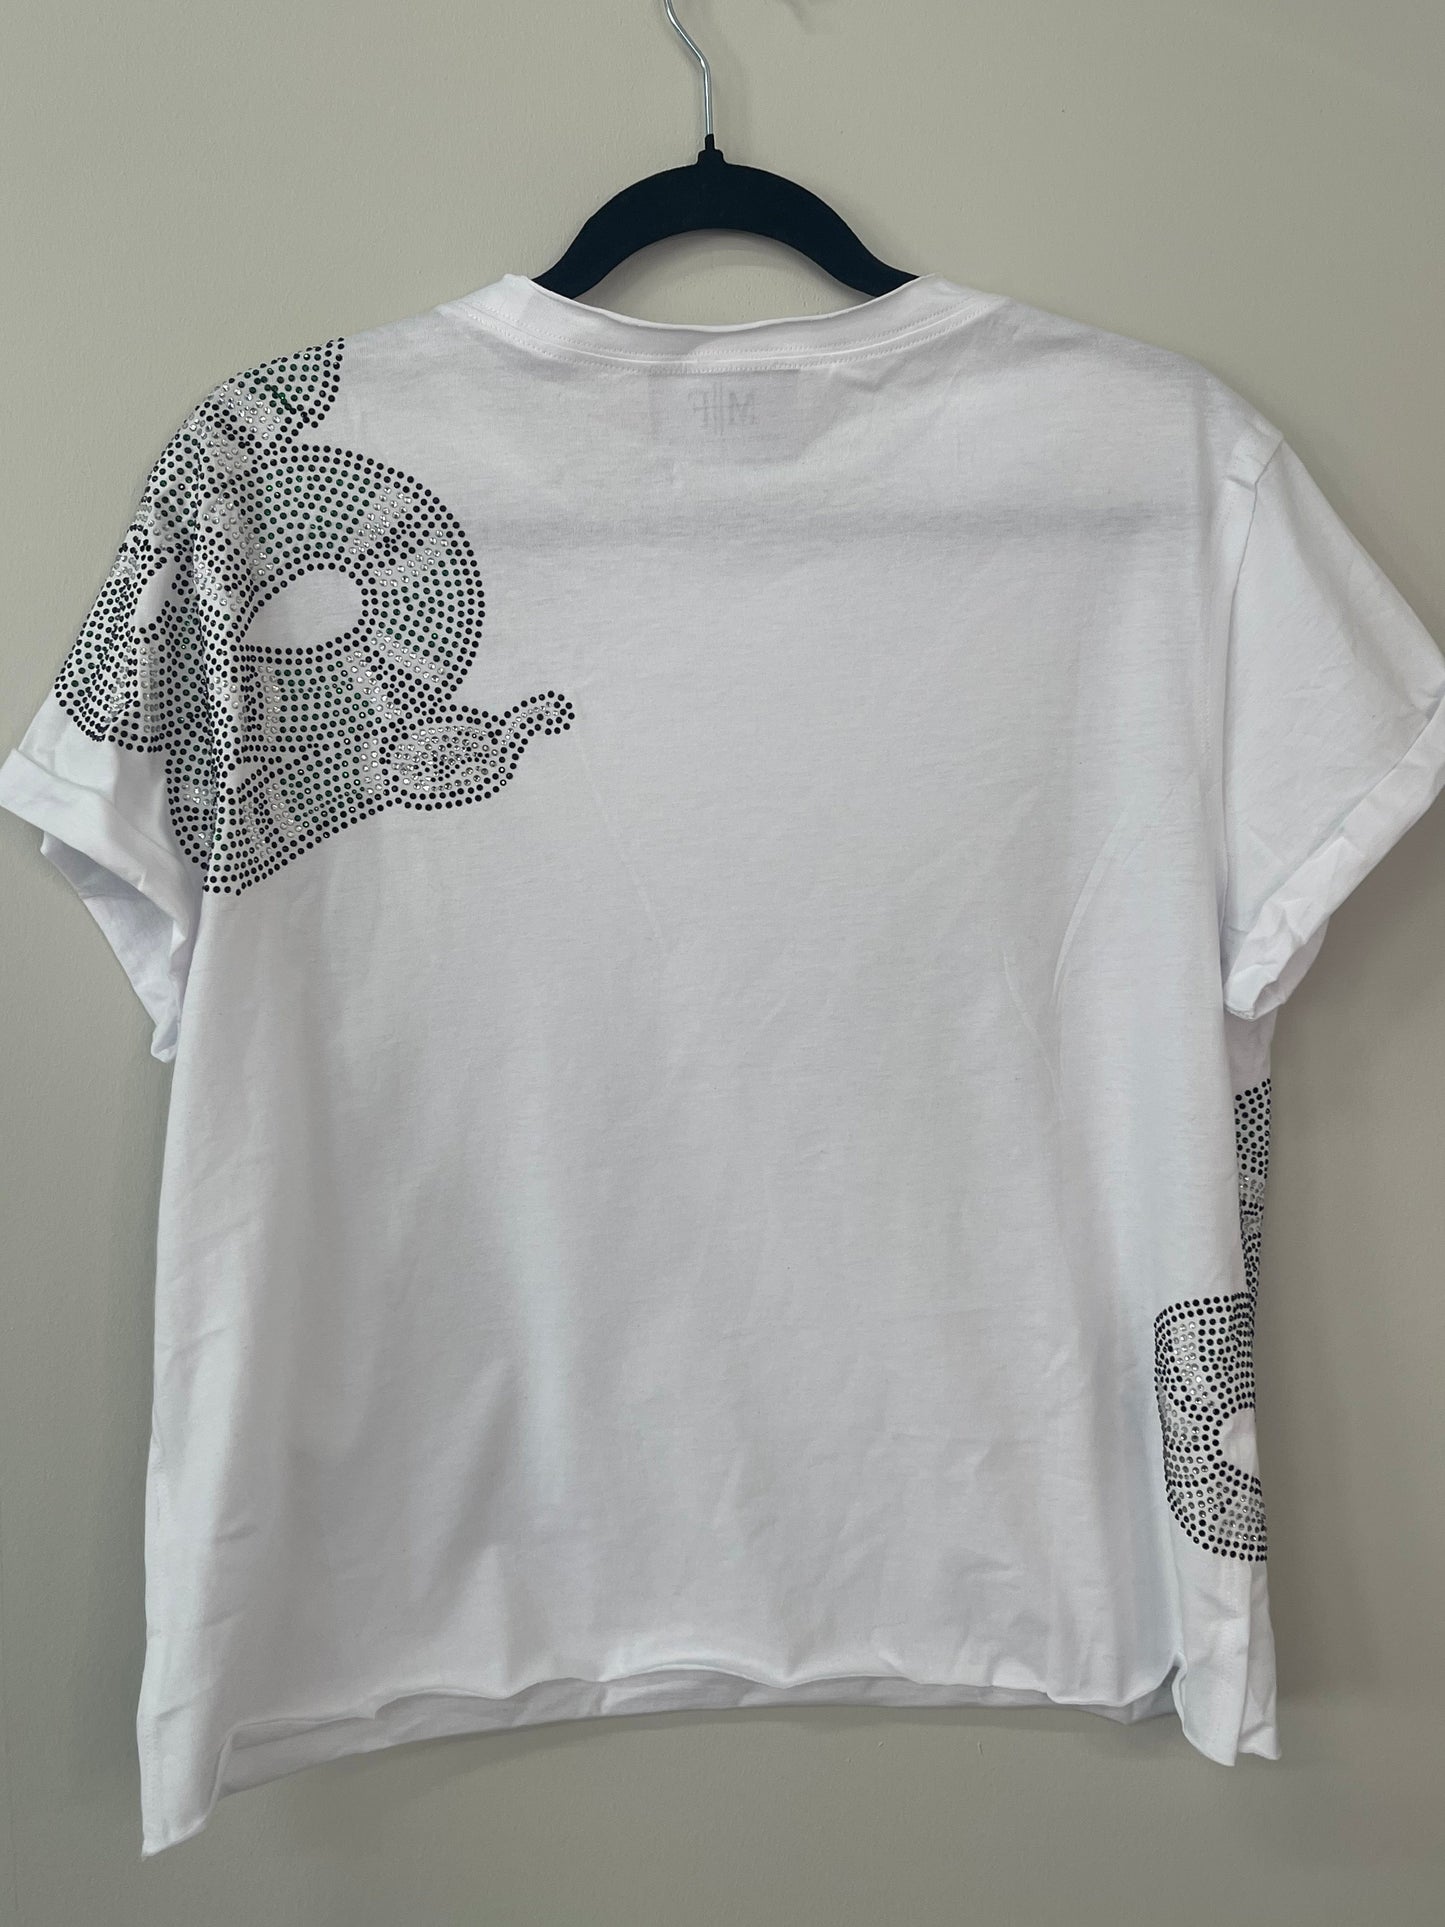 T-Shirt, Raw Edge White, Crystal Snakes